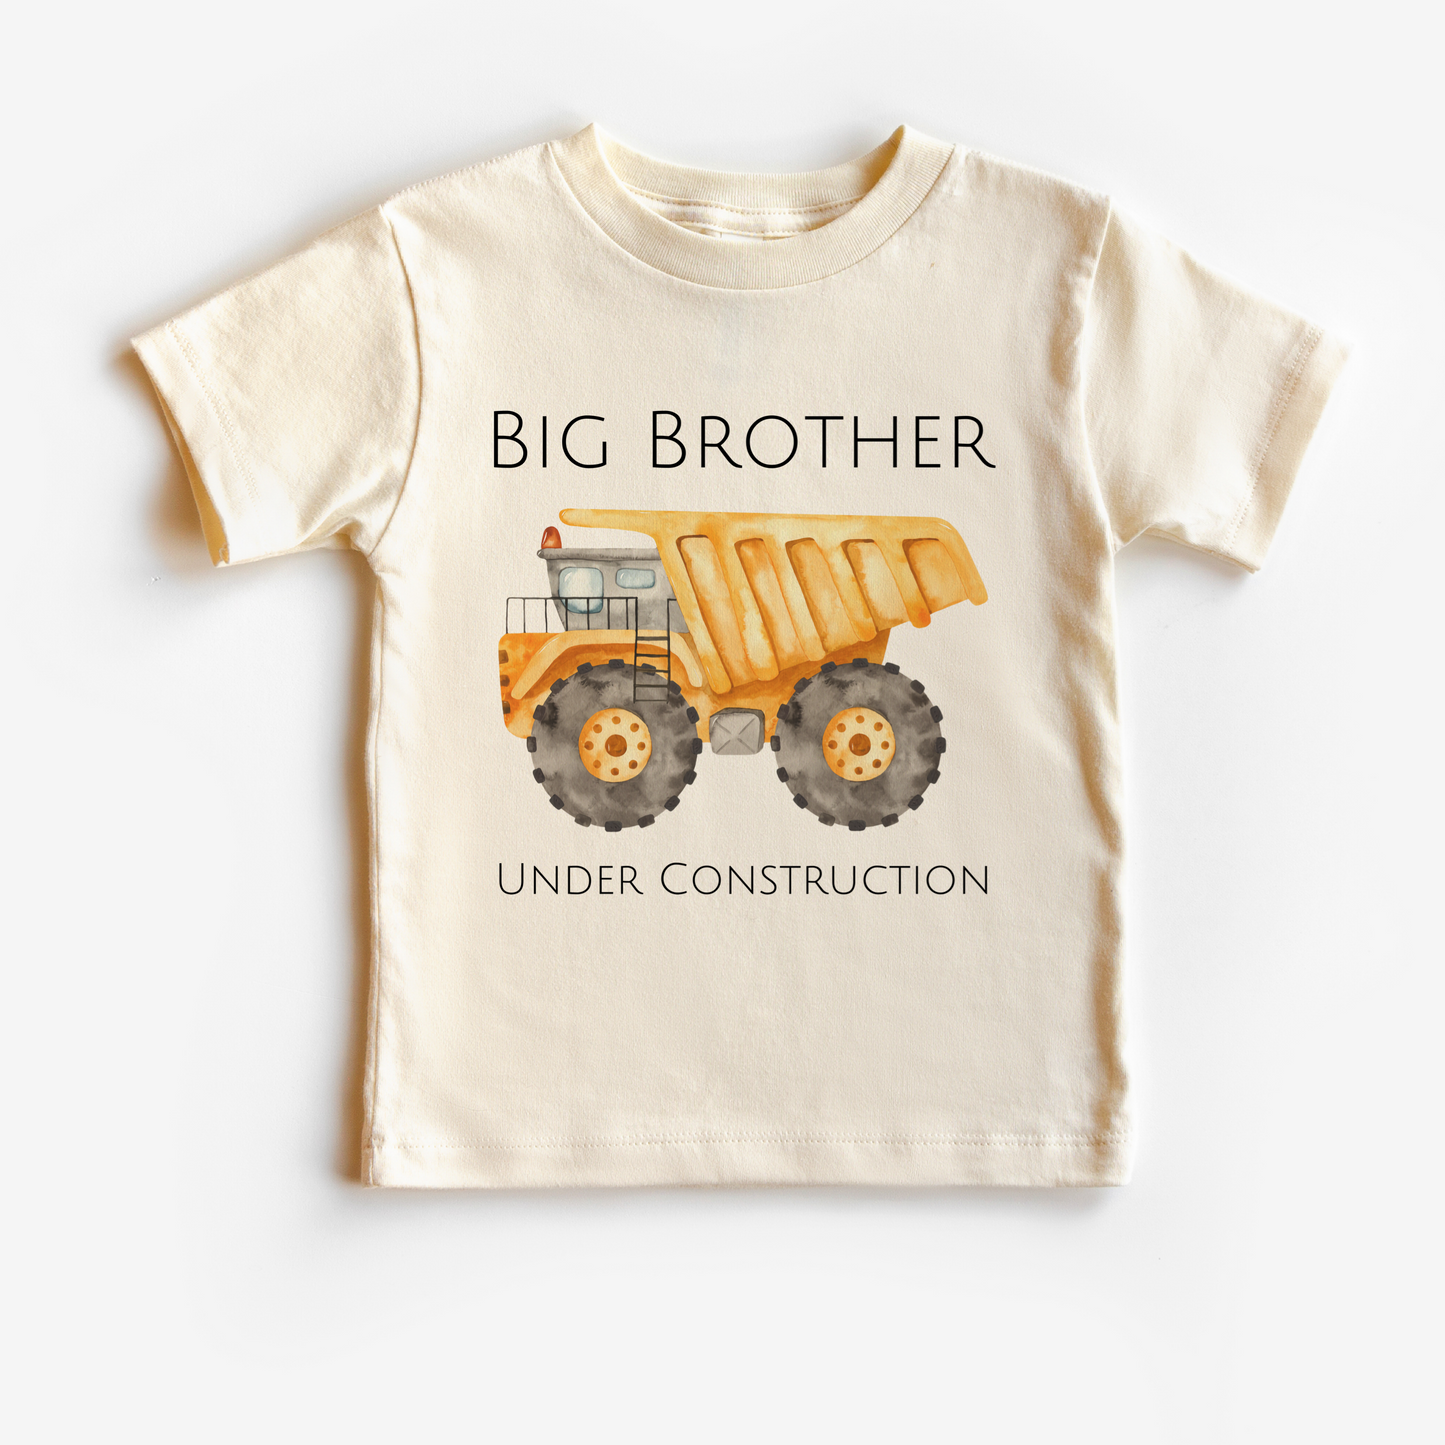 Big brother under Construction shirt